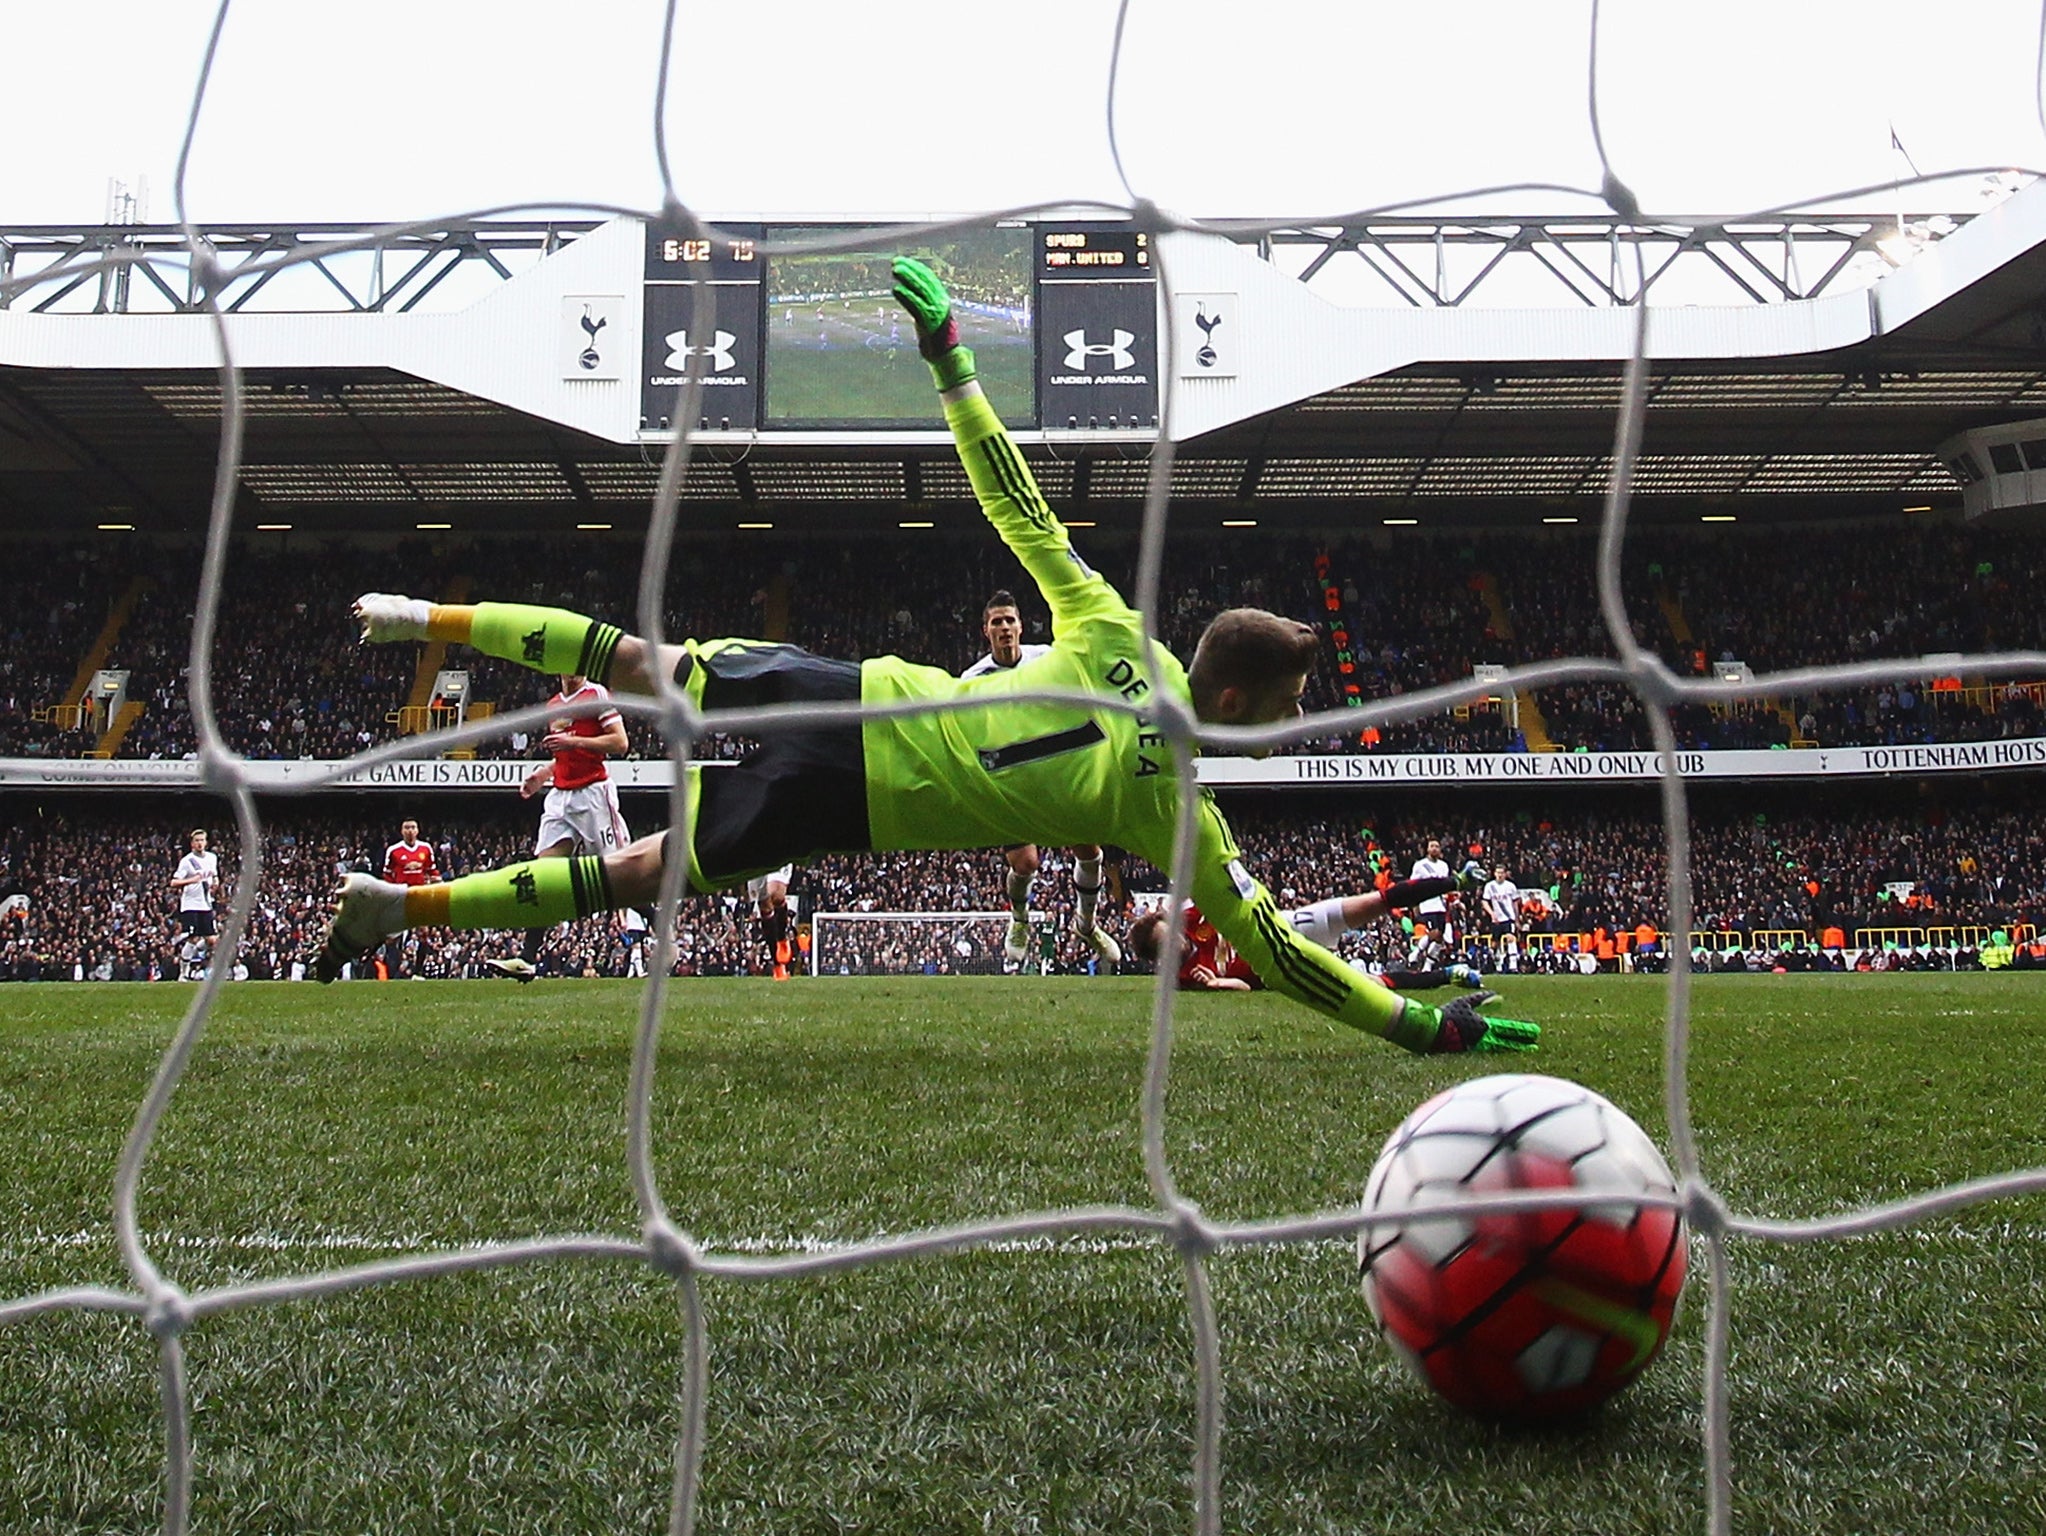 Erik Lamela fires home Tottenham's third goal of the game